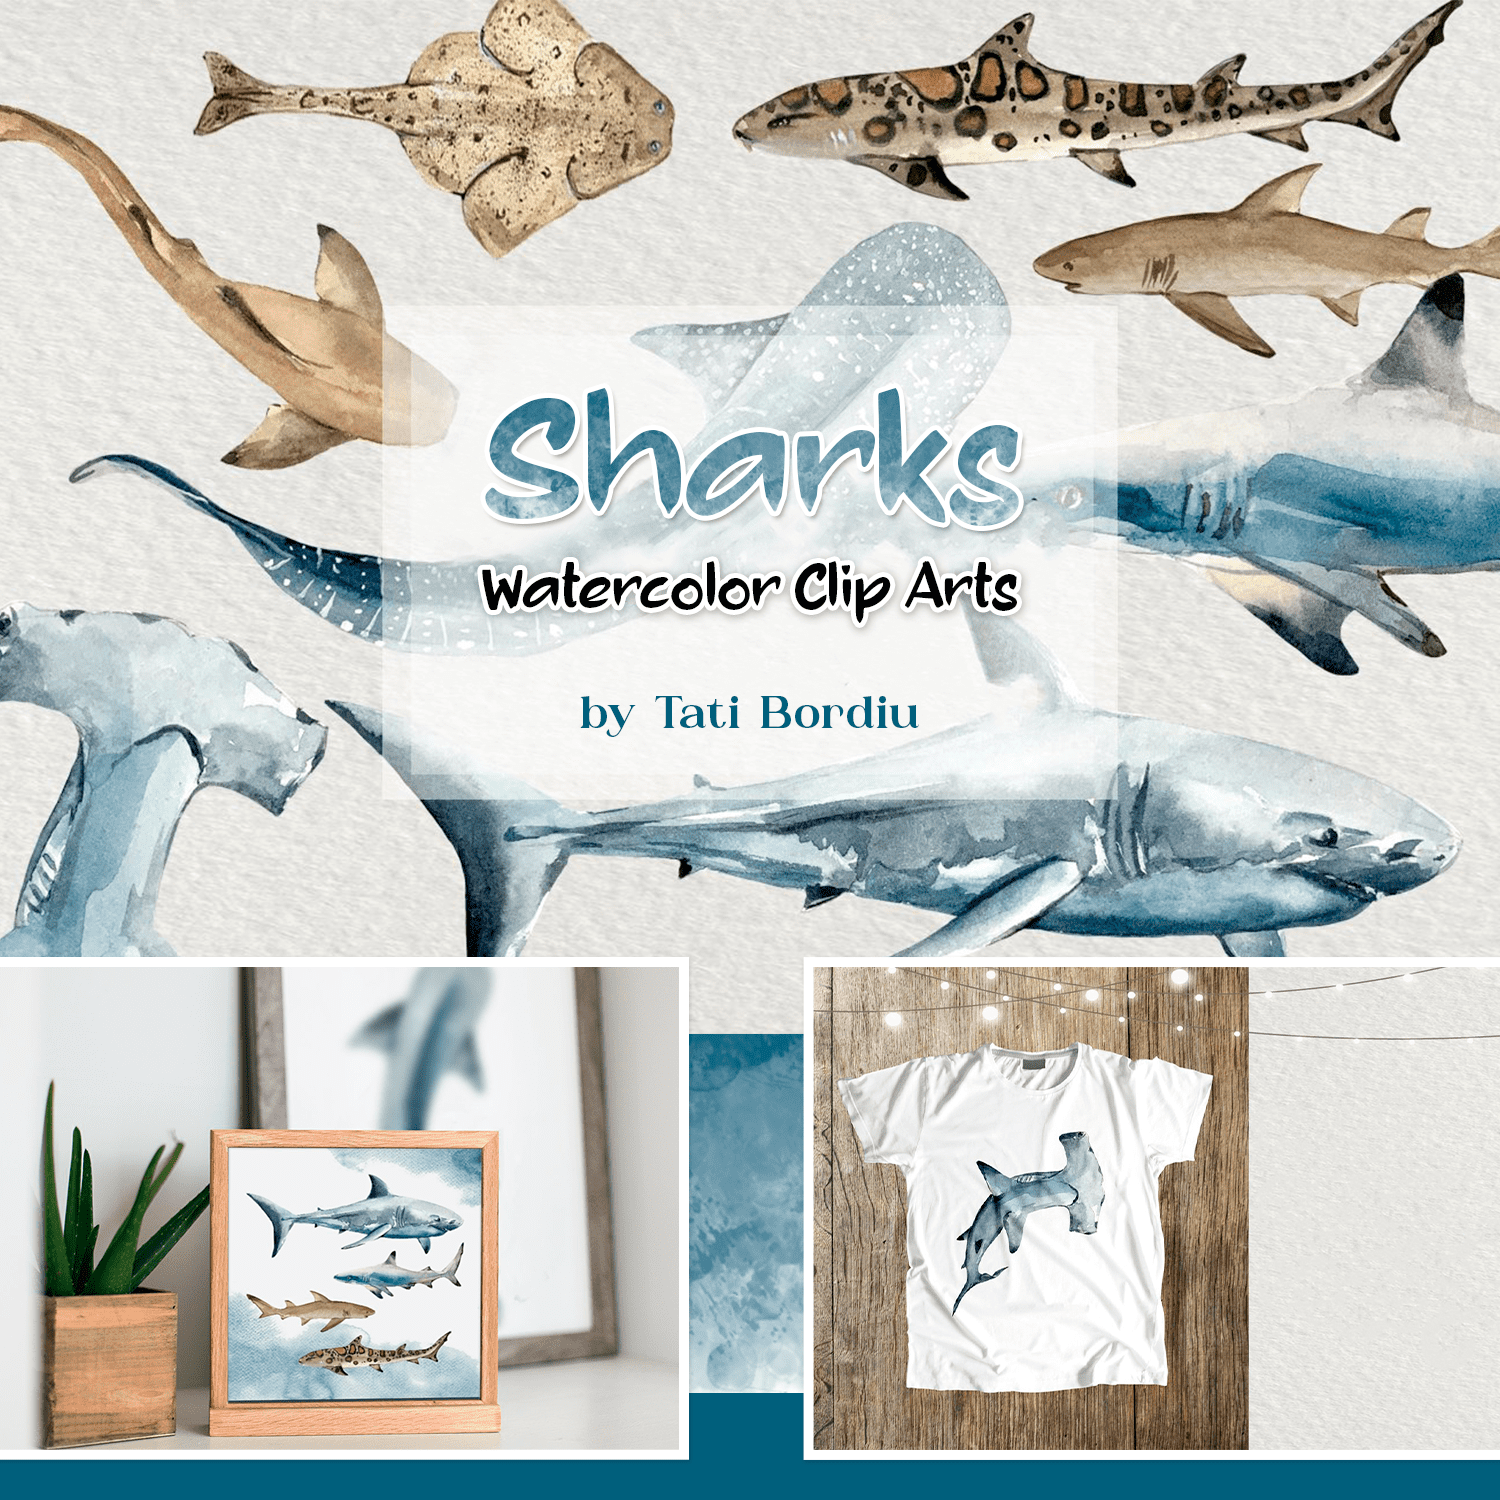 Sharks - Watercolor Clip Arts cover.